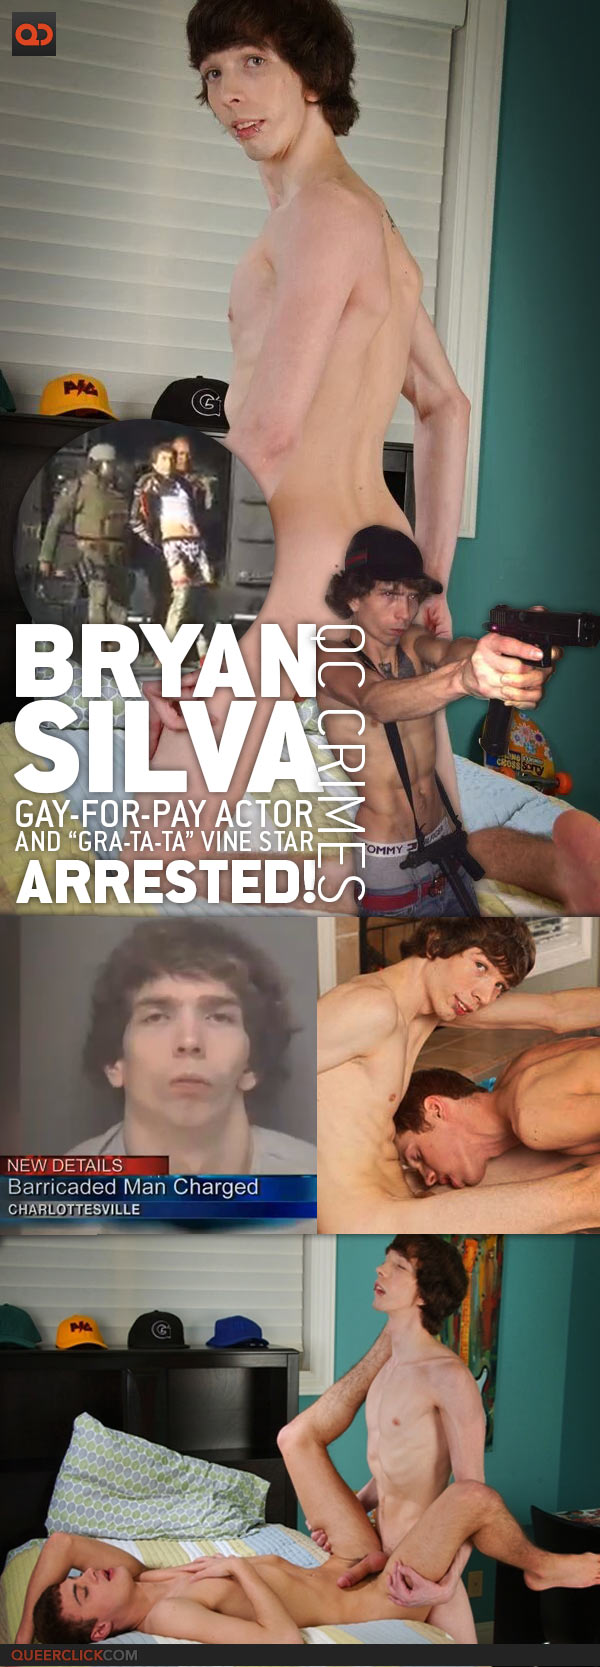 Bryan silva in porn